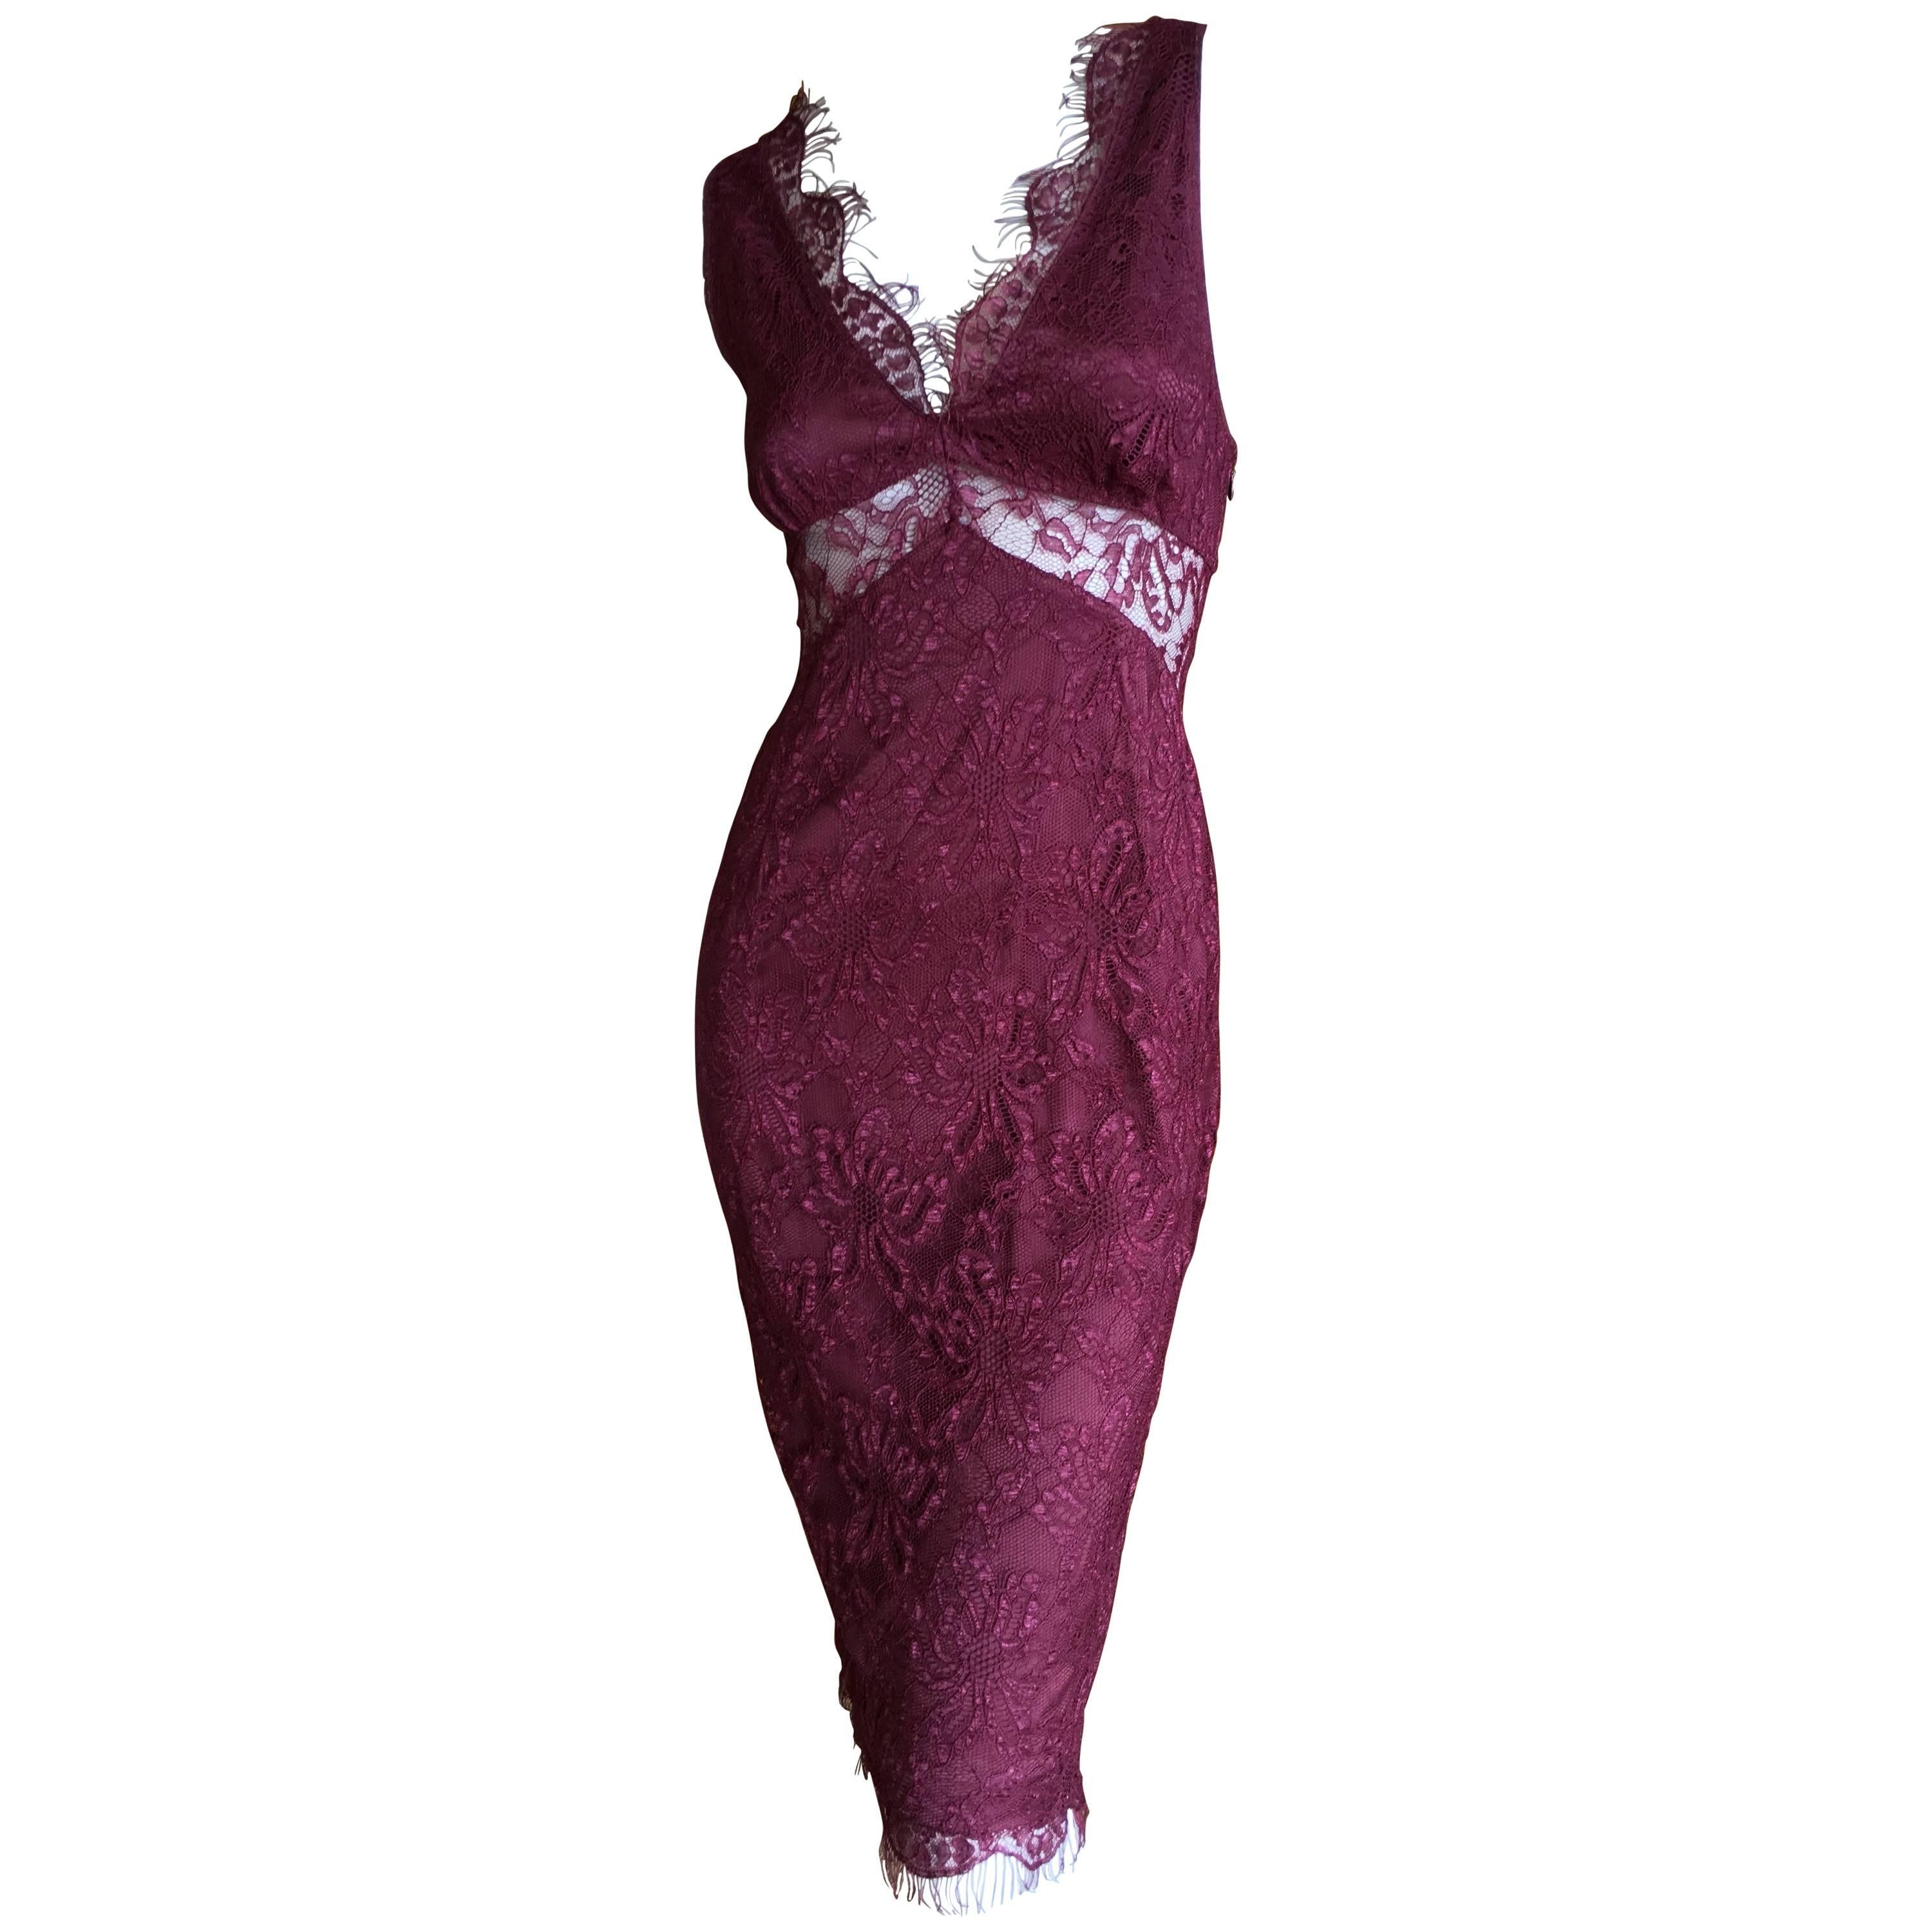  D&G Dolce & Gabbana Vintage Lace Overlay Sheer Cocktail Dress For Sale